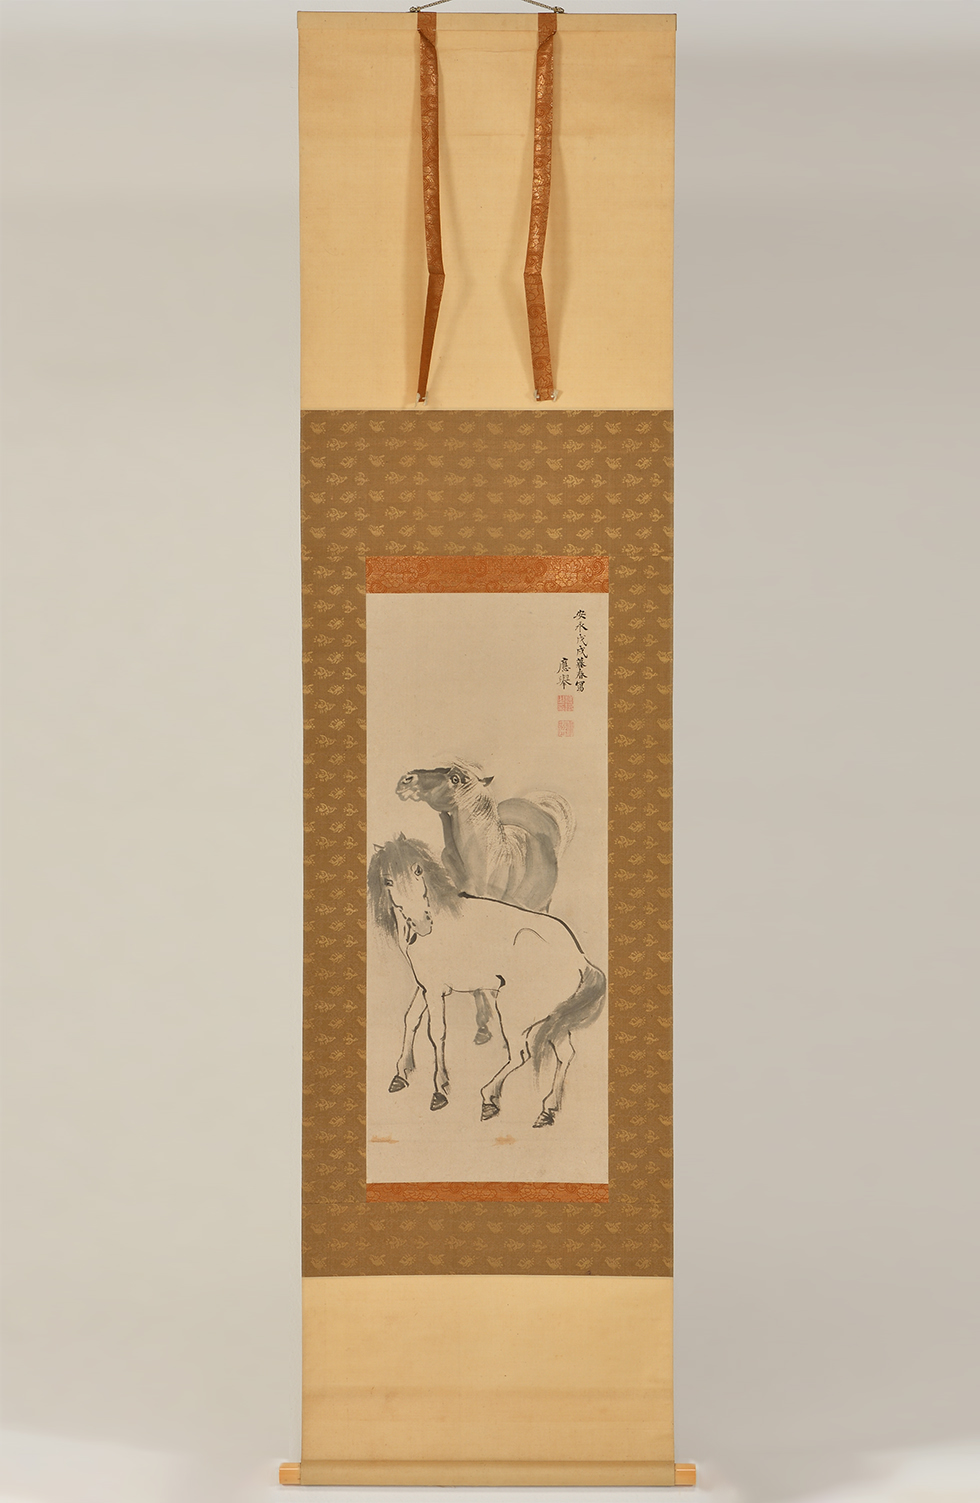 Hanging scroll “Hourses” painted by Maruyama Ōkyo (1733-1795)